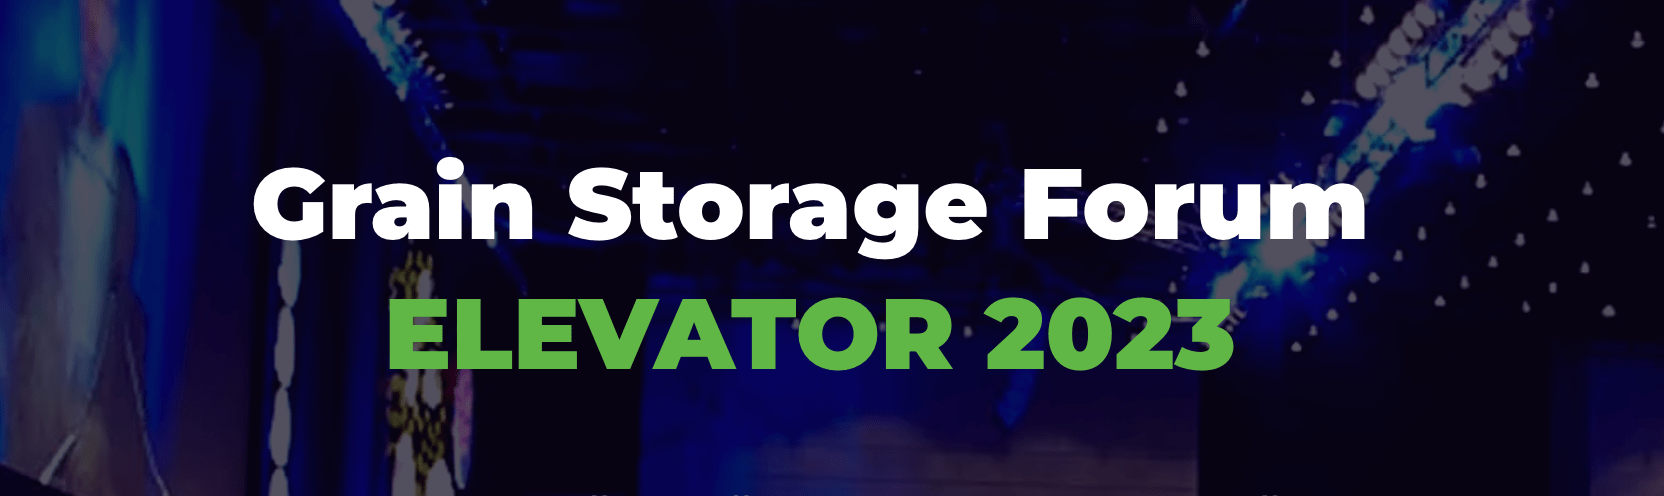 We invite you to the Grain Storage Forum ELEVATOR 2023!